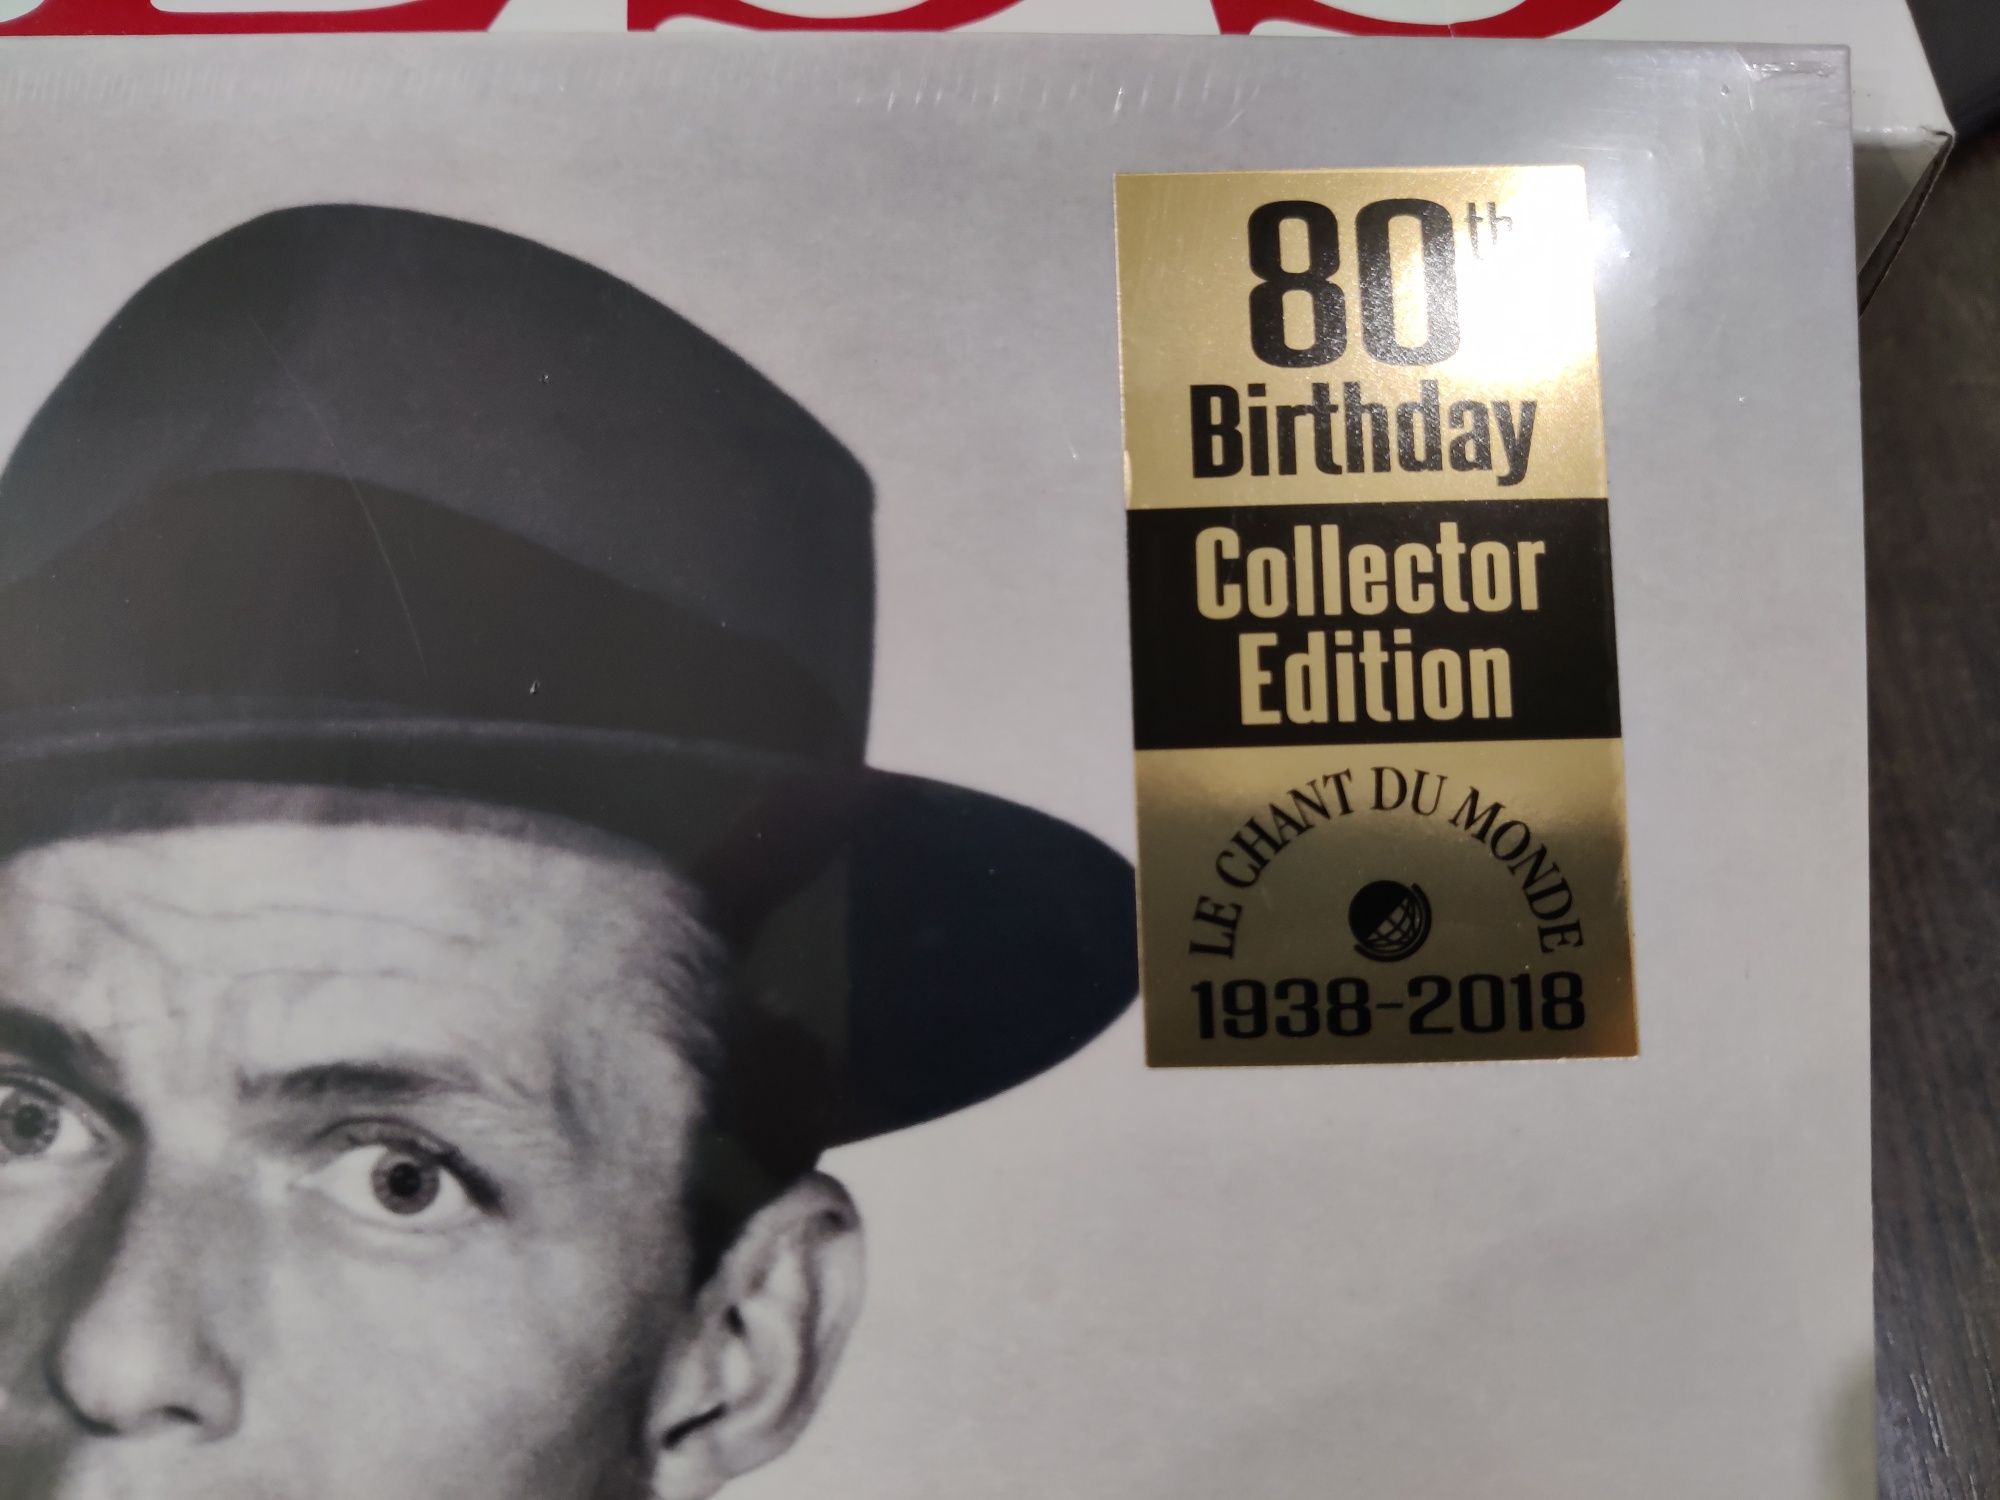 Frank Sinatra - Chicago (2LP Vinyl) 80th Birthday 2018